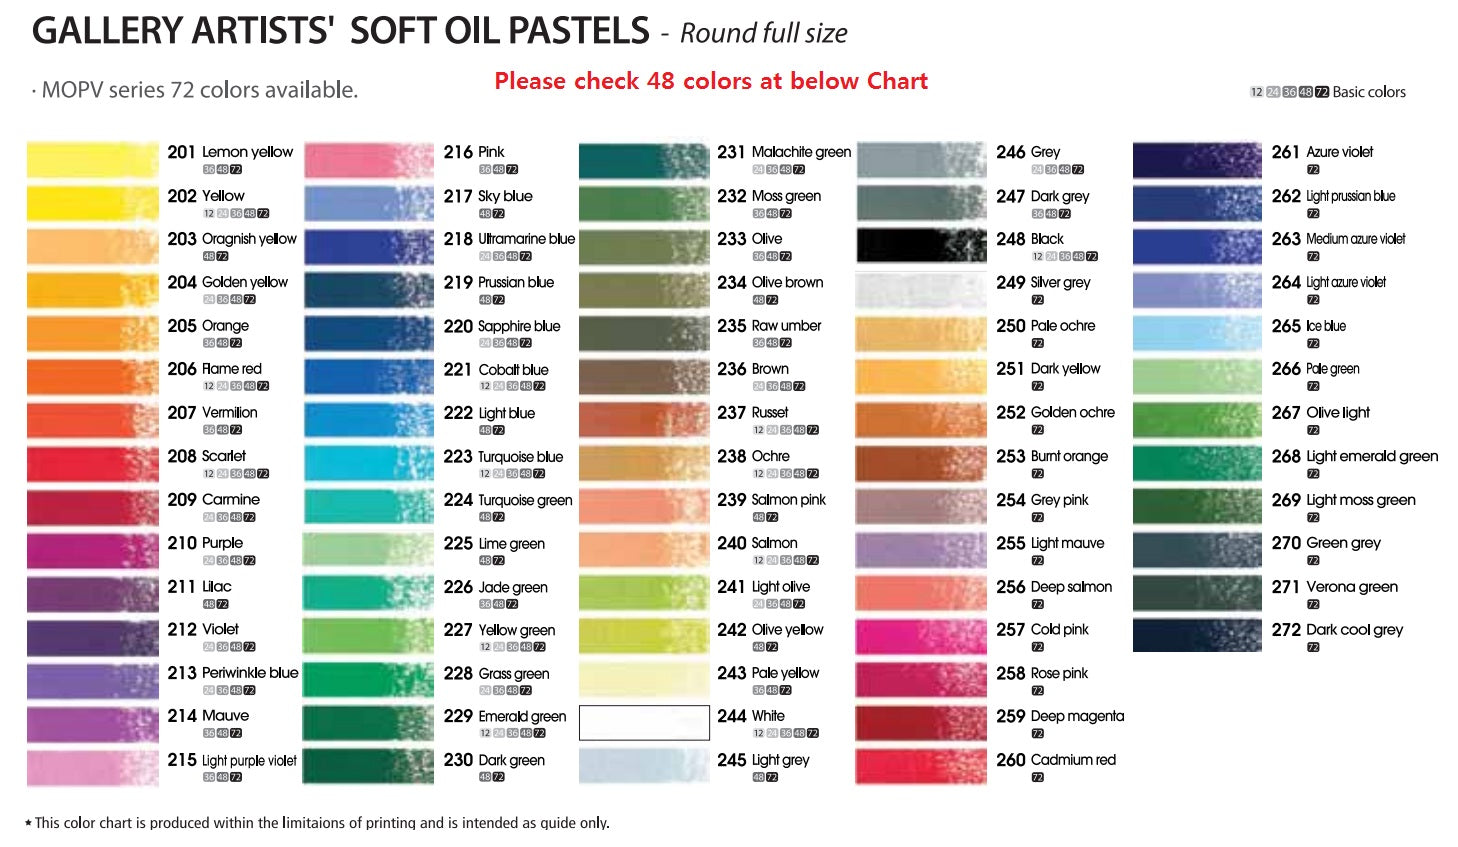 Mungyo Gallery Artists' Oil Pastels - 24 Metallic Colors